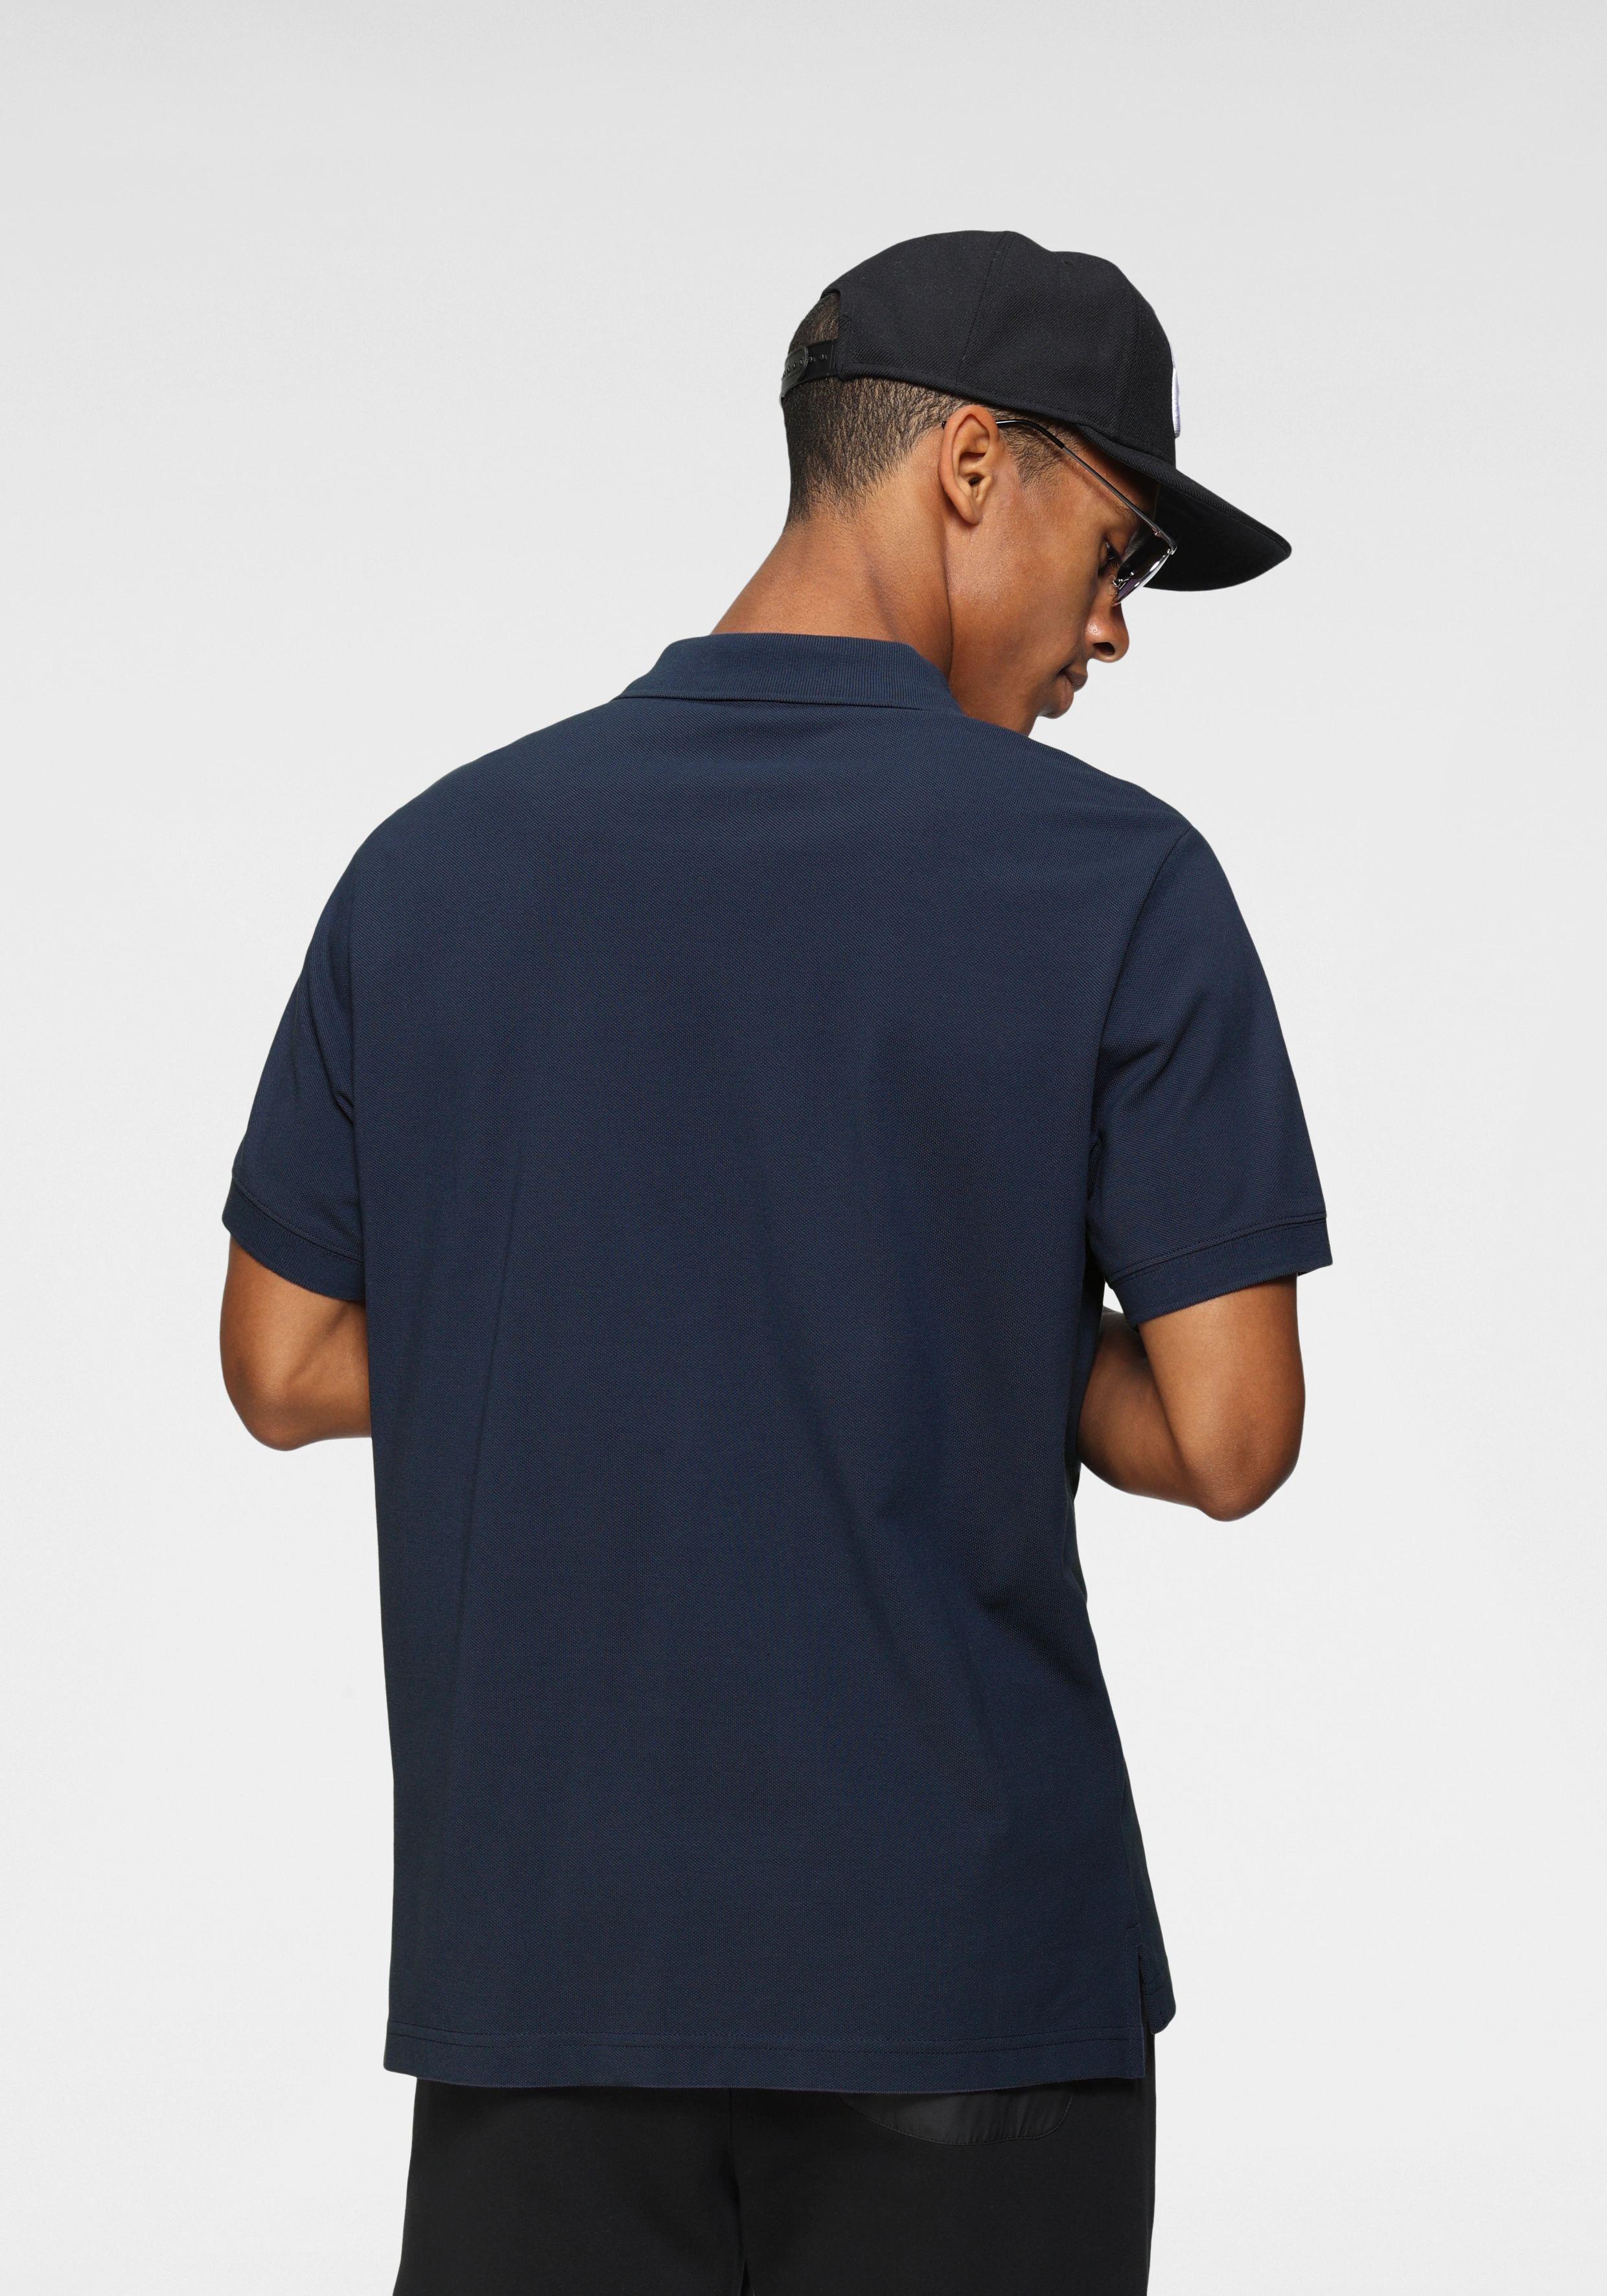 Nike Sportswear Matchup Kurzarm-poloshirt 2XL White / Black günstig online kaufen